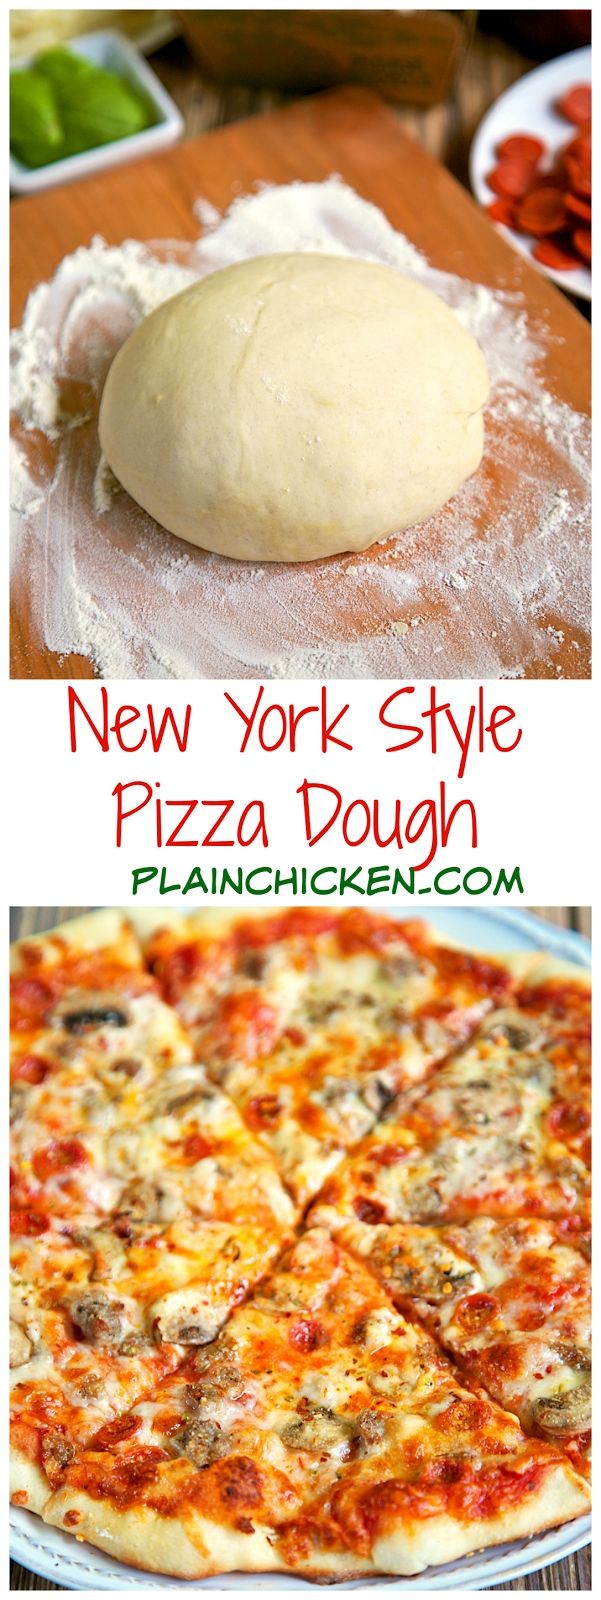 New York Style Pizza Dough Recipe - only 4 ingredi...